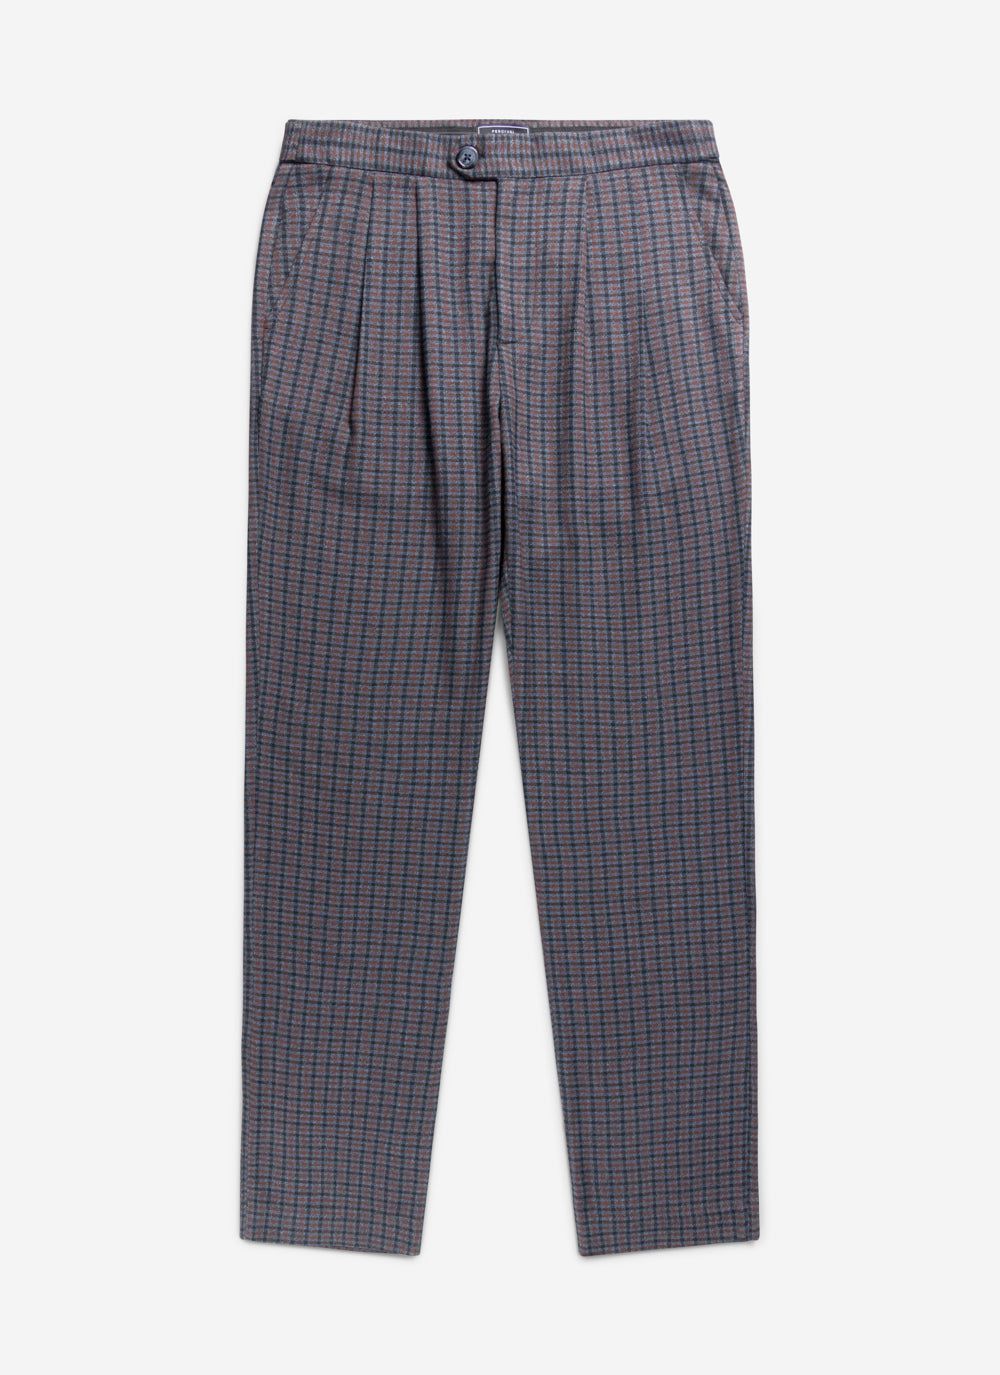 Men's Pleated Trousers | Oversized | Mini Check | Grey & Percival Menswear